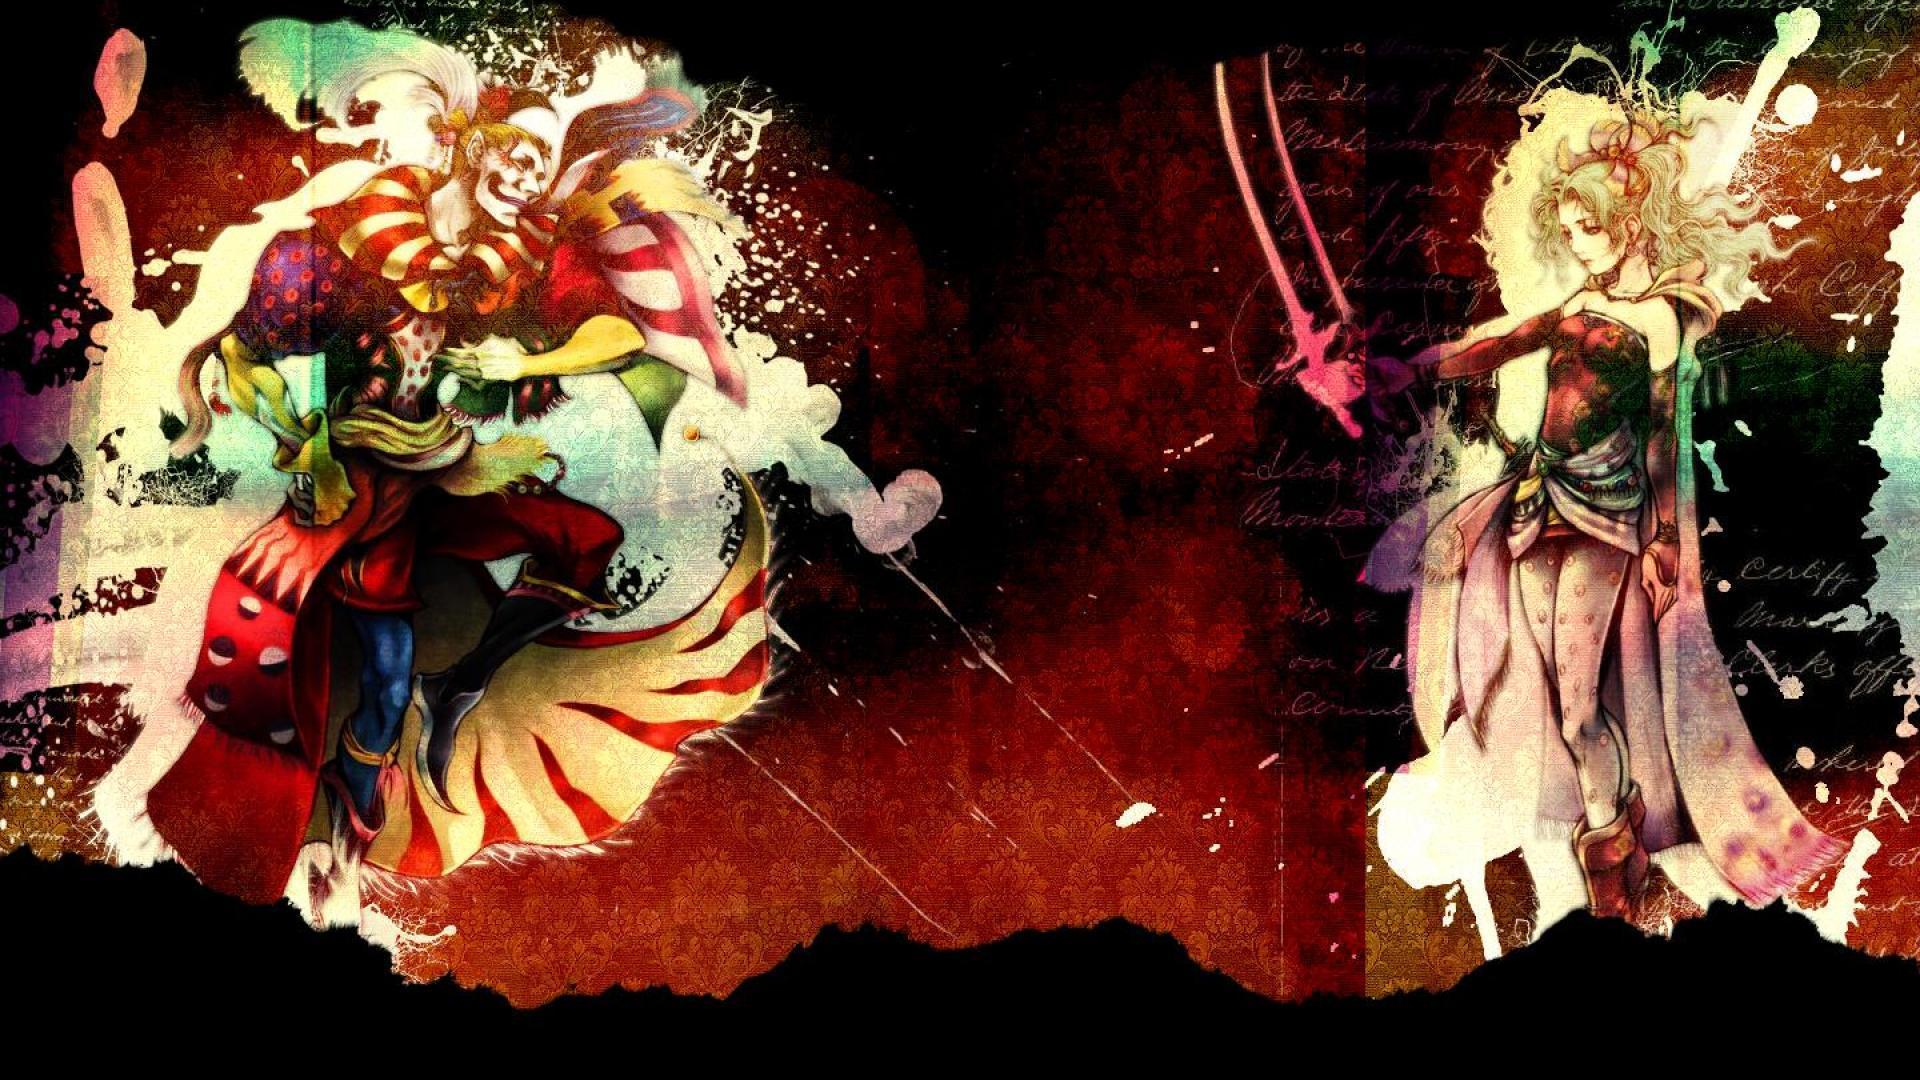 Final Fantasy VI Wallpaper, Final Fantasy VI, Game